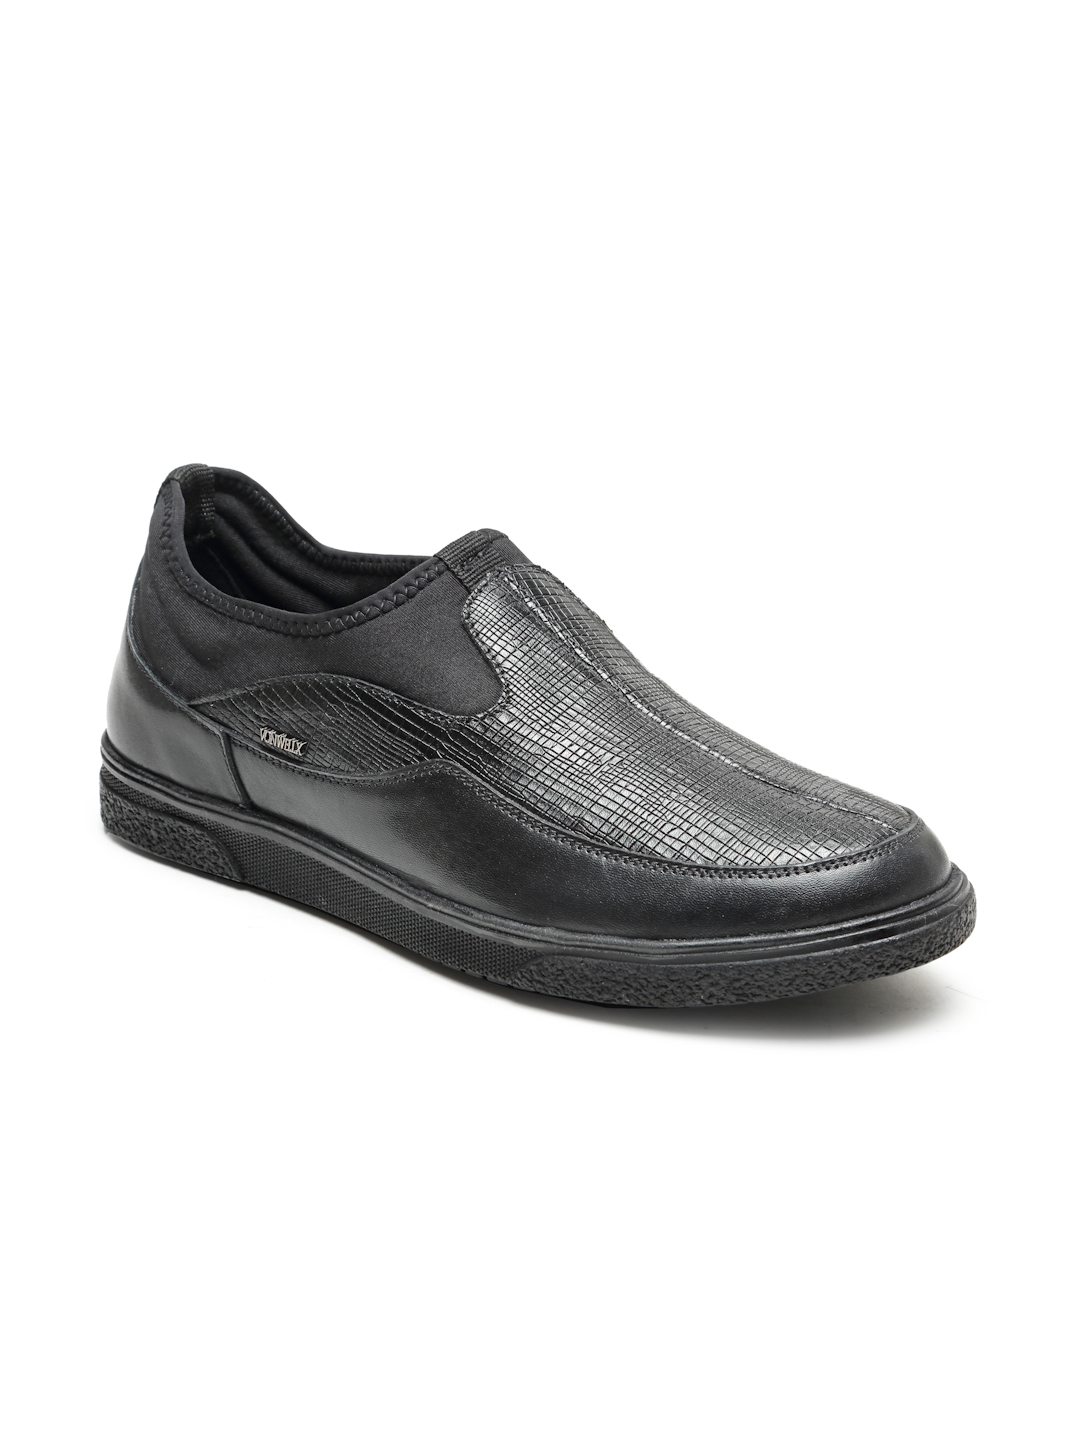 Buy Von Wellx Germany Comfort Men's Black Casual Loafers Everett Online in Chennai